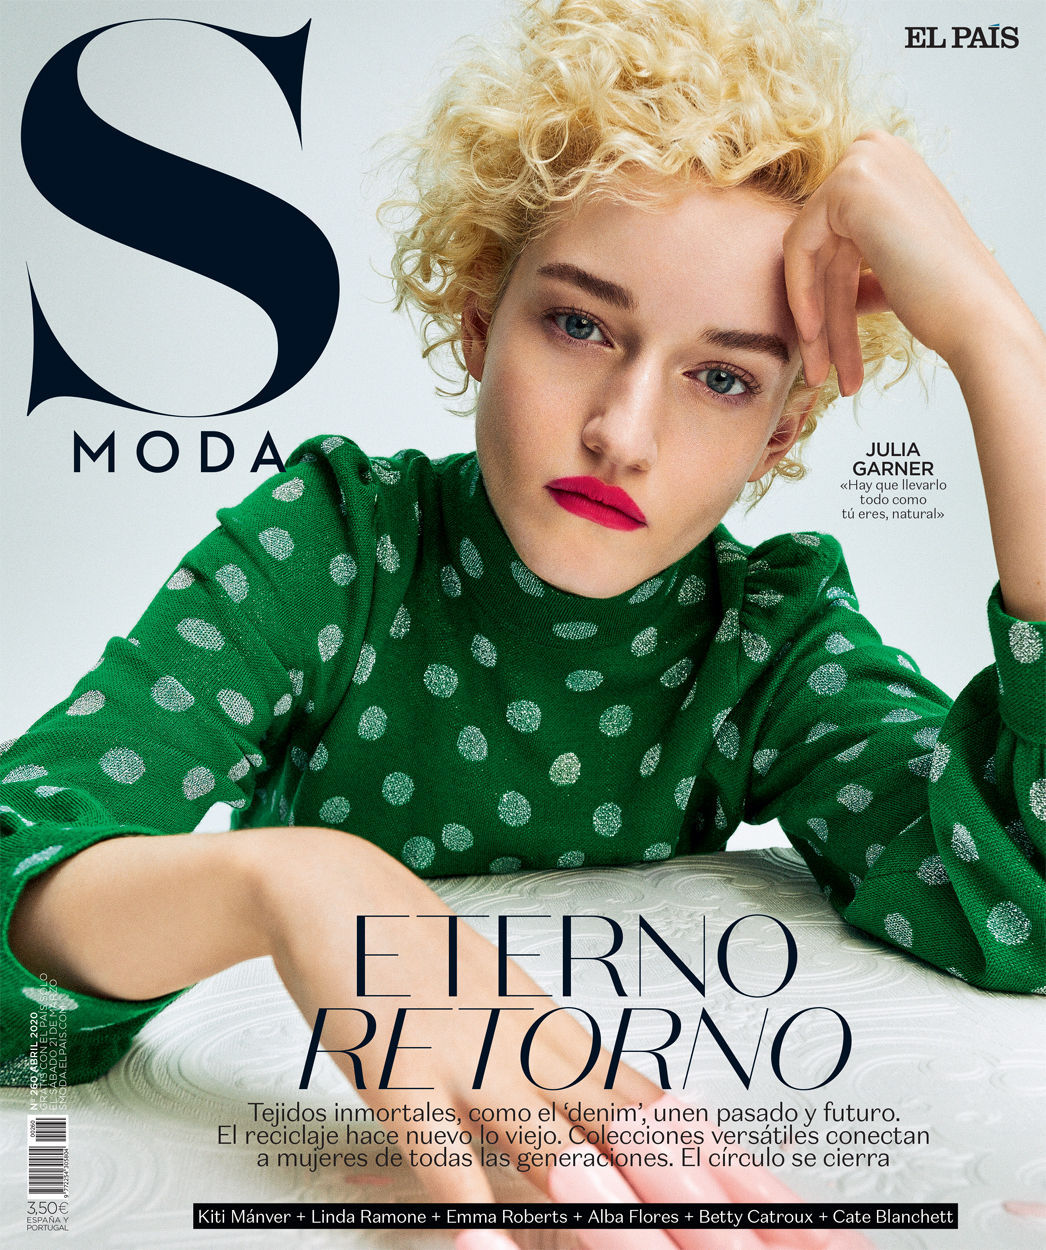 Celebrity Photographer Michael Schwartz: Julia Garner for S Moda Magazine cover in Gucci